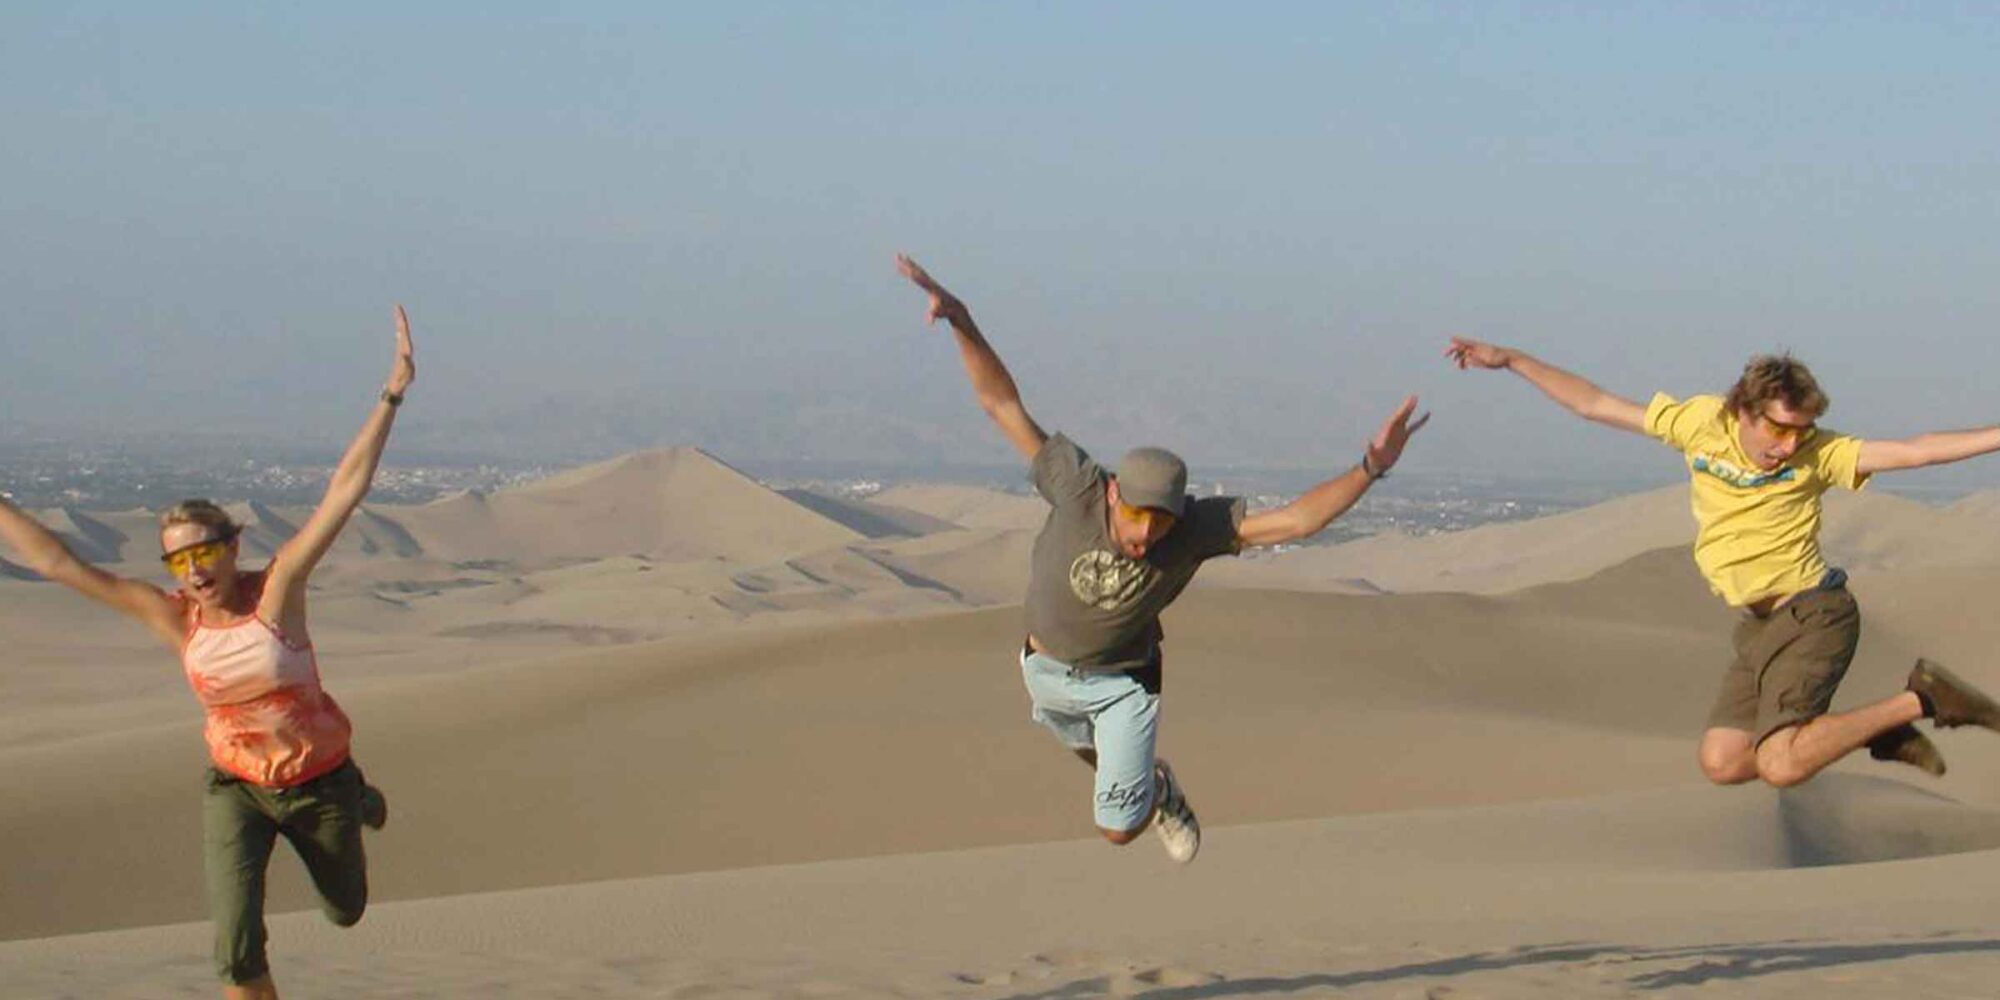 The the Largest Sand Dune in Sud America” Cerro Blanco